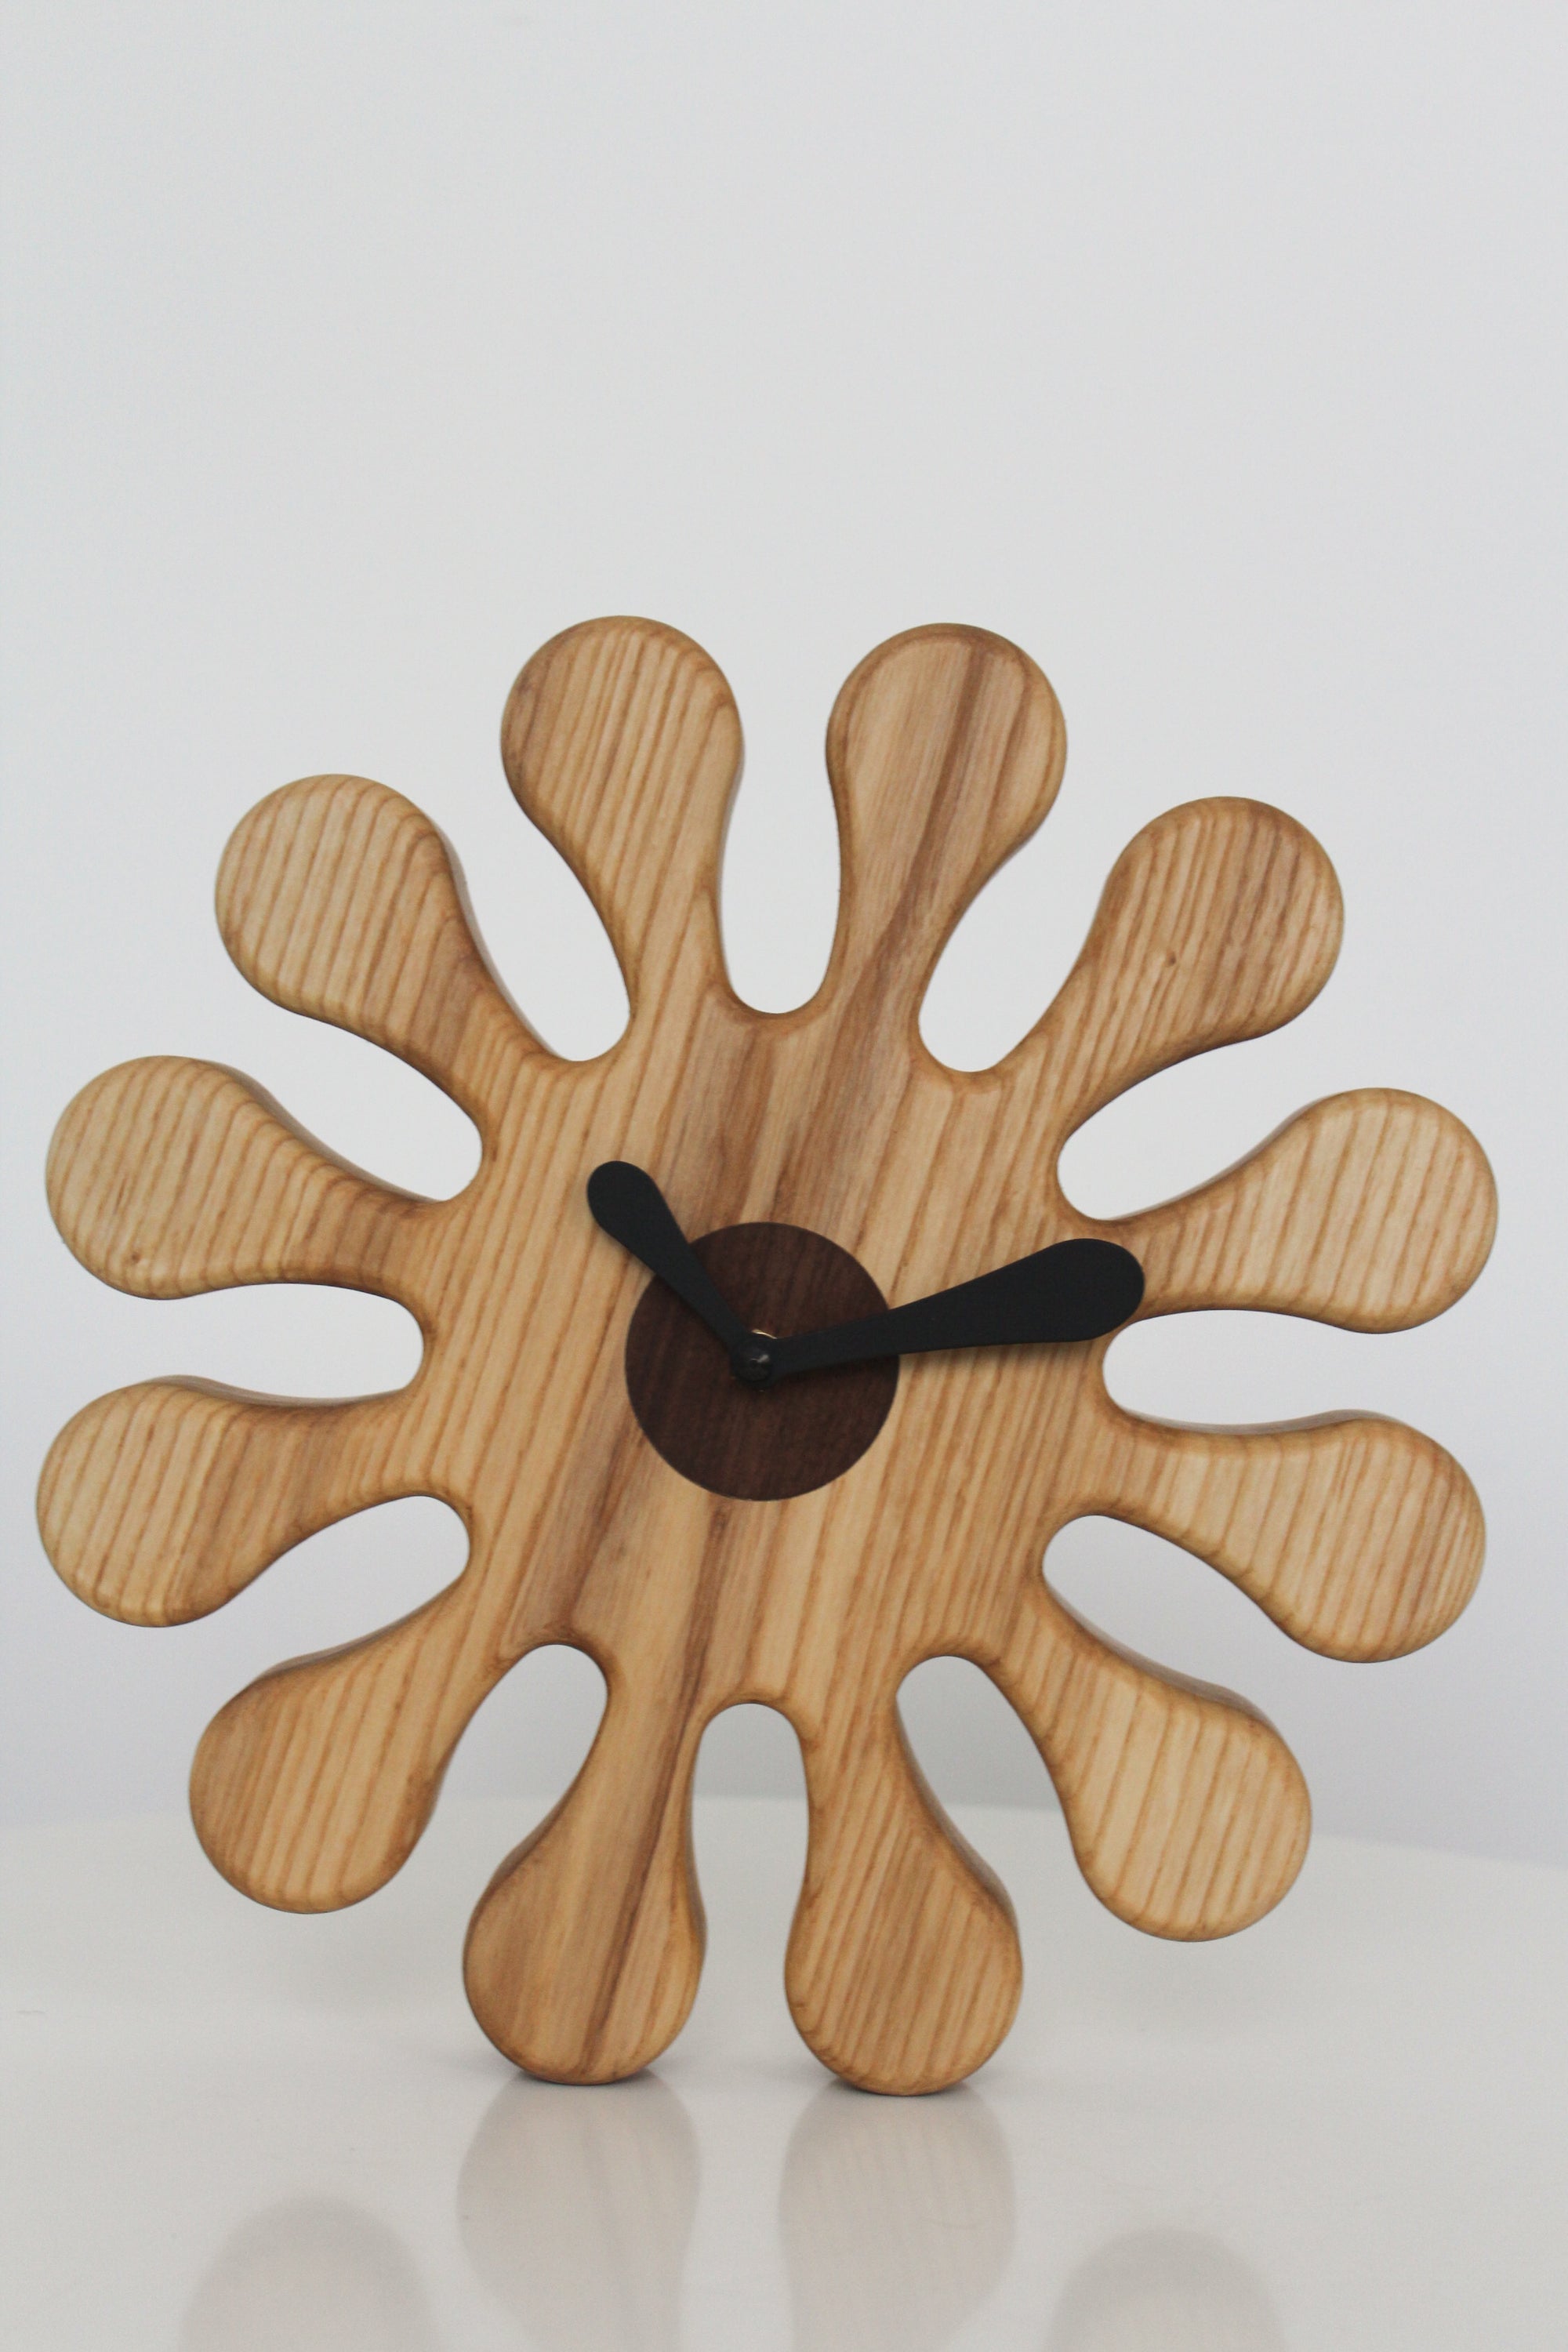 Splat Clock by Devon Munro